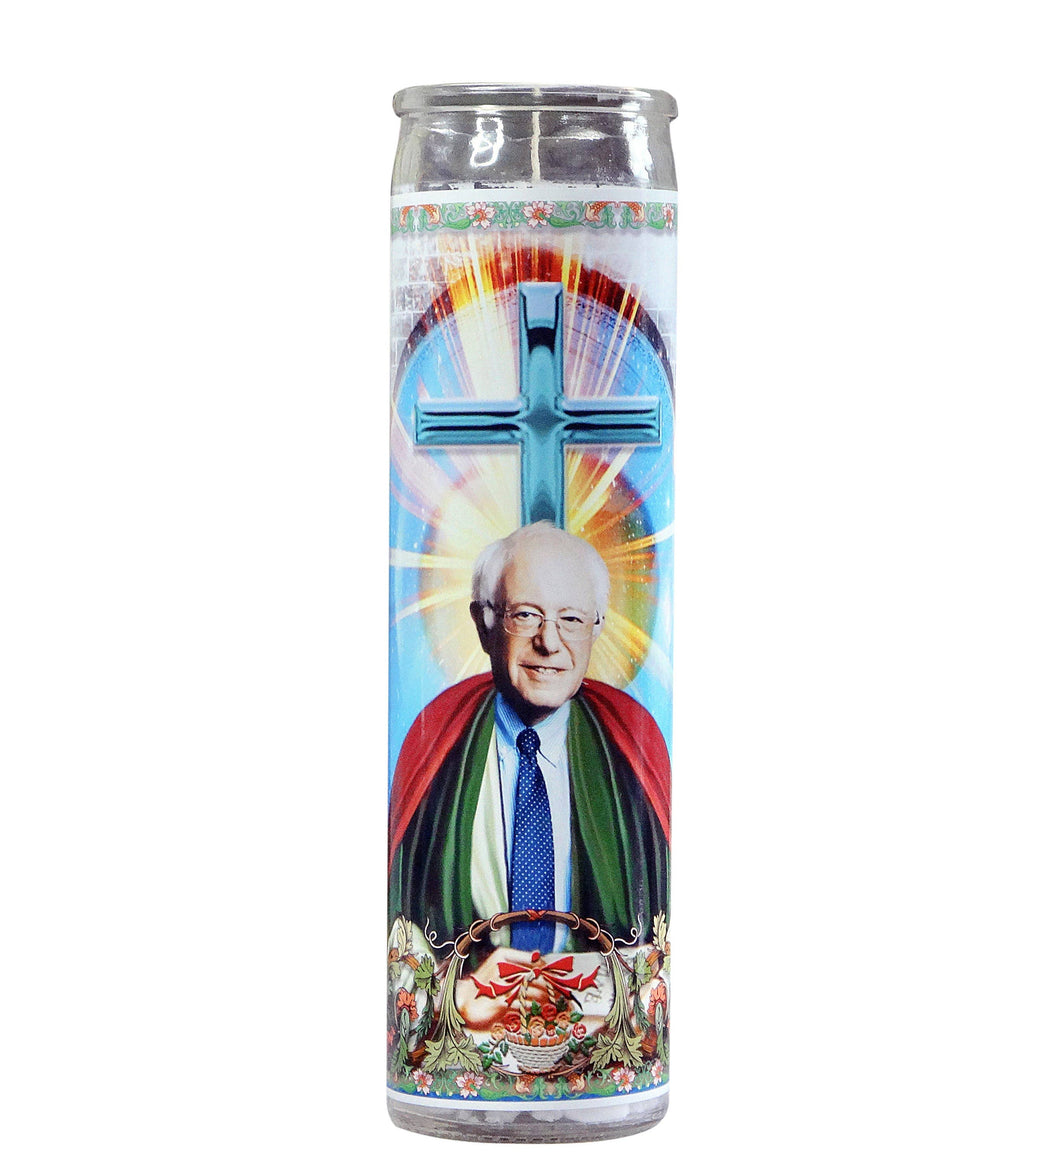 Bernie Sanders Celebrity Prayer Candle